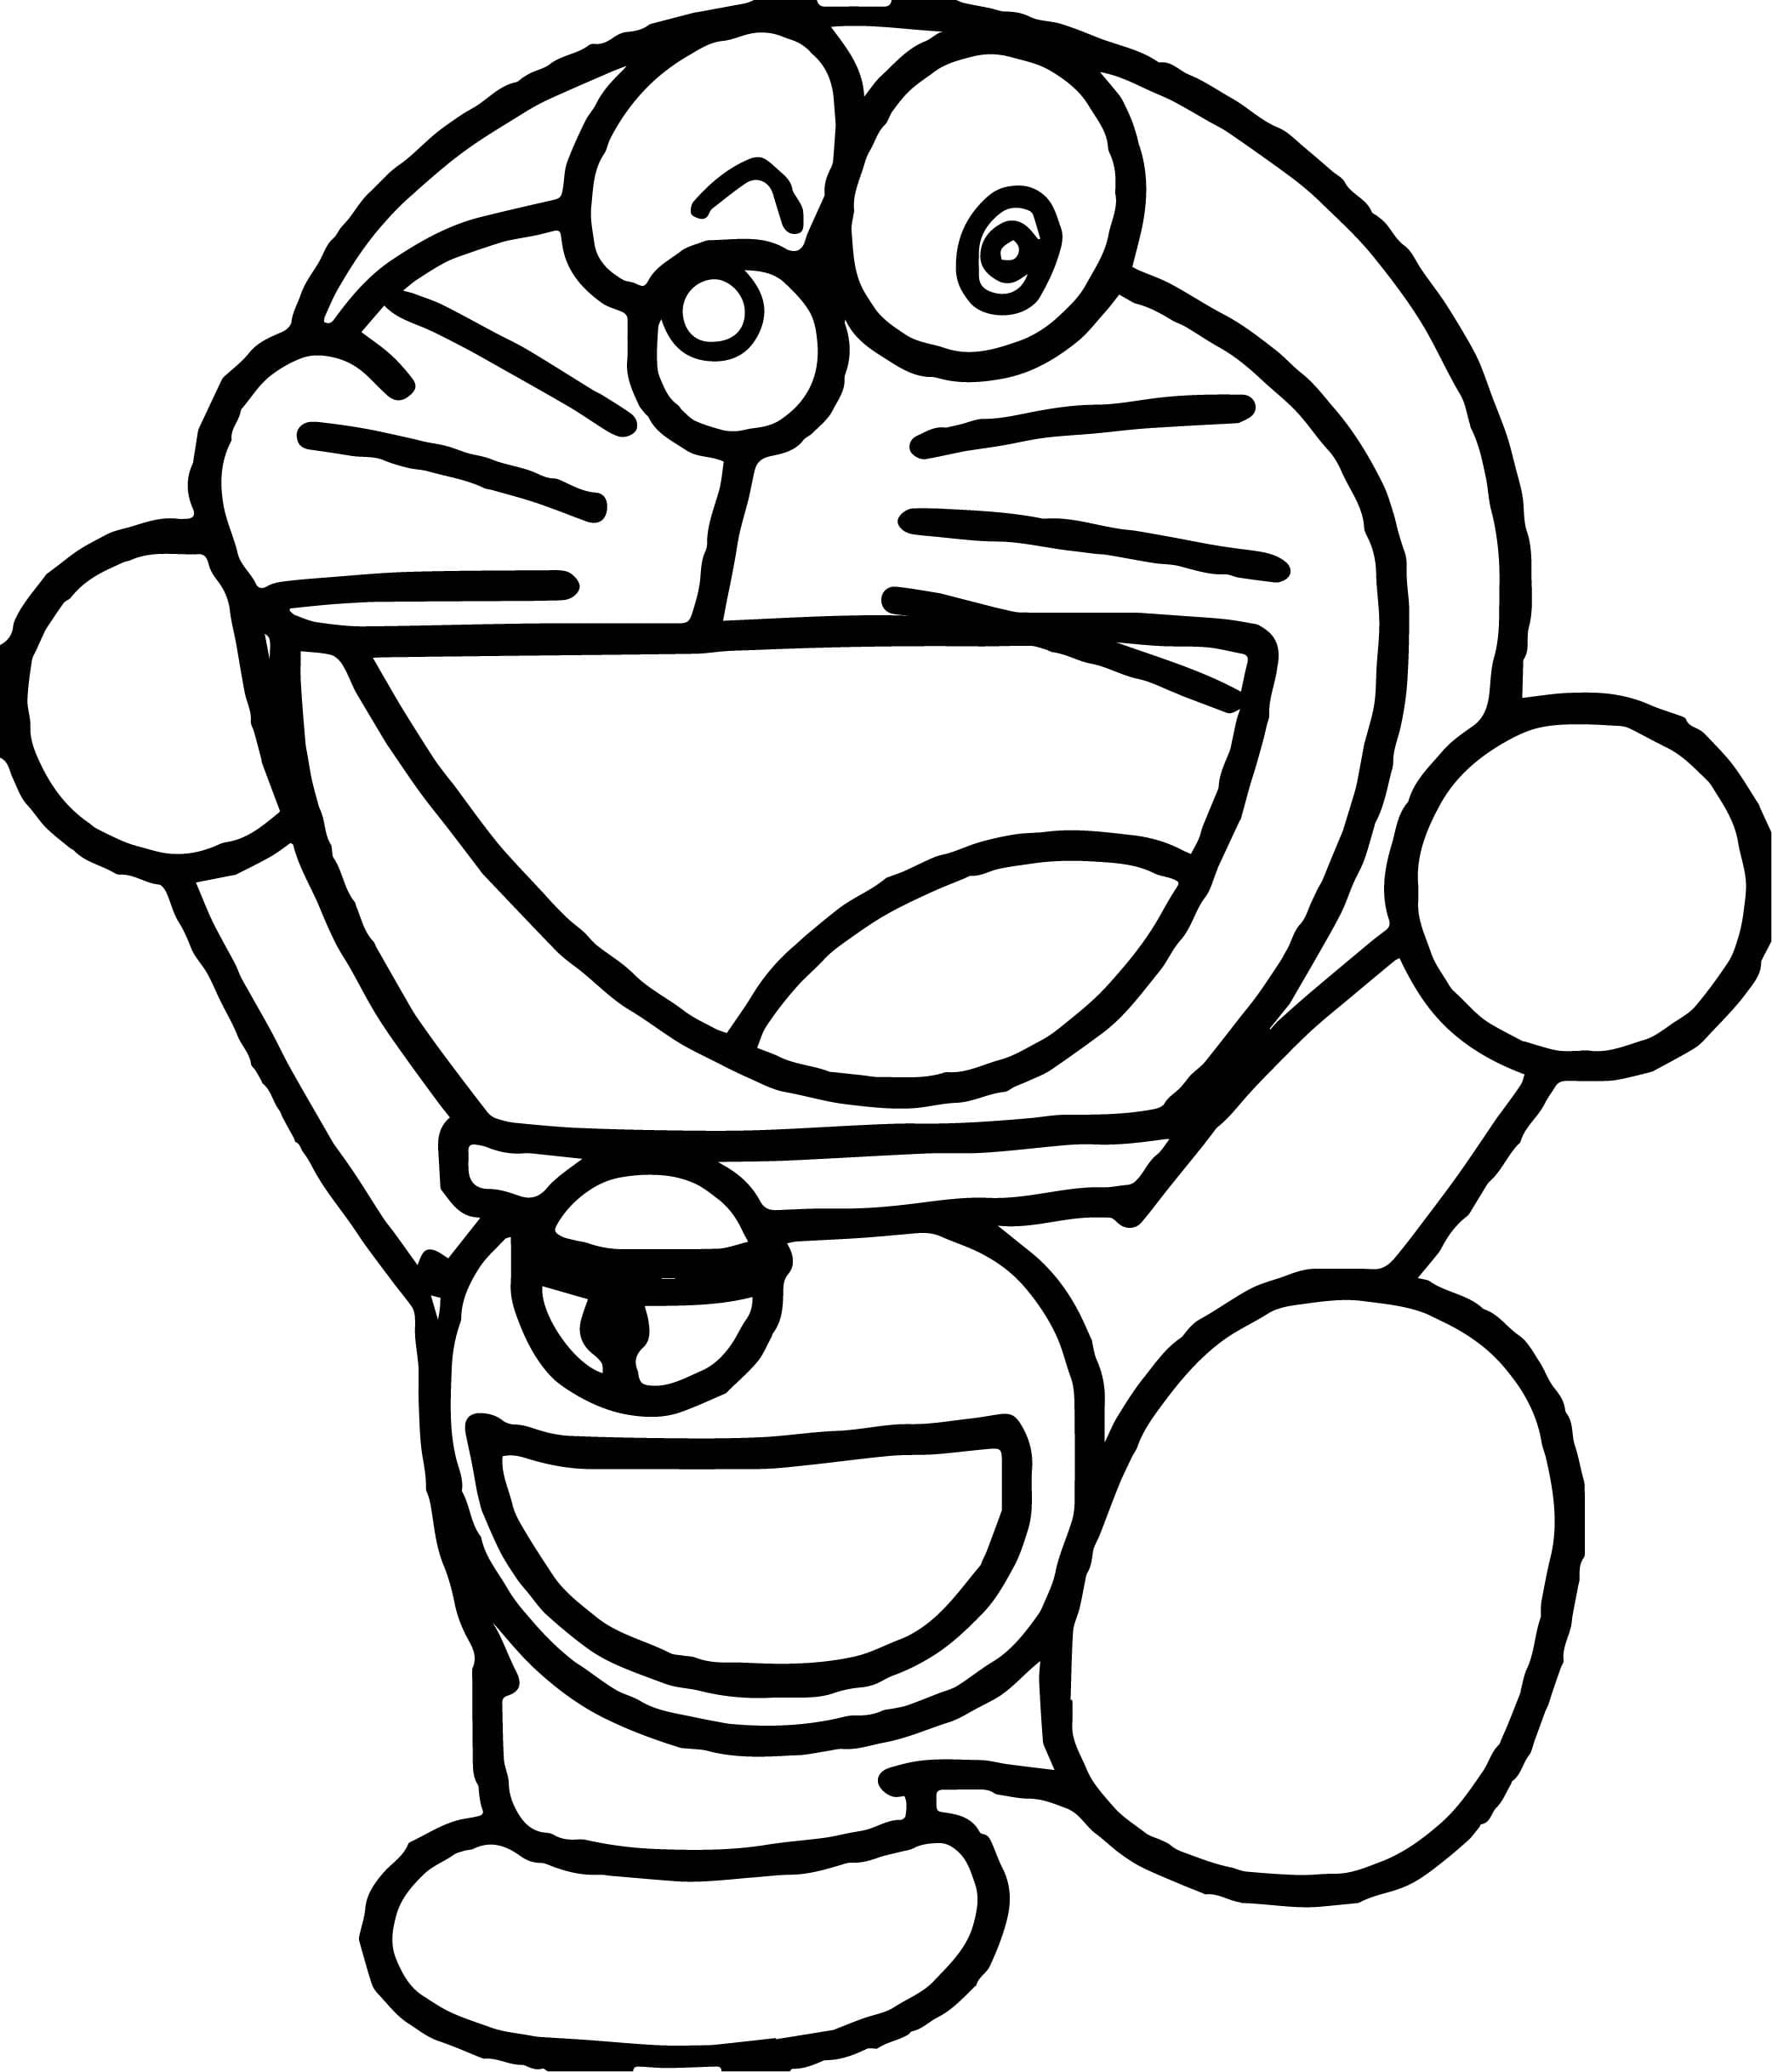 Doraemon-Ausmalbilder-ausmalbilderkinder.de-17